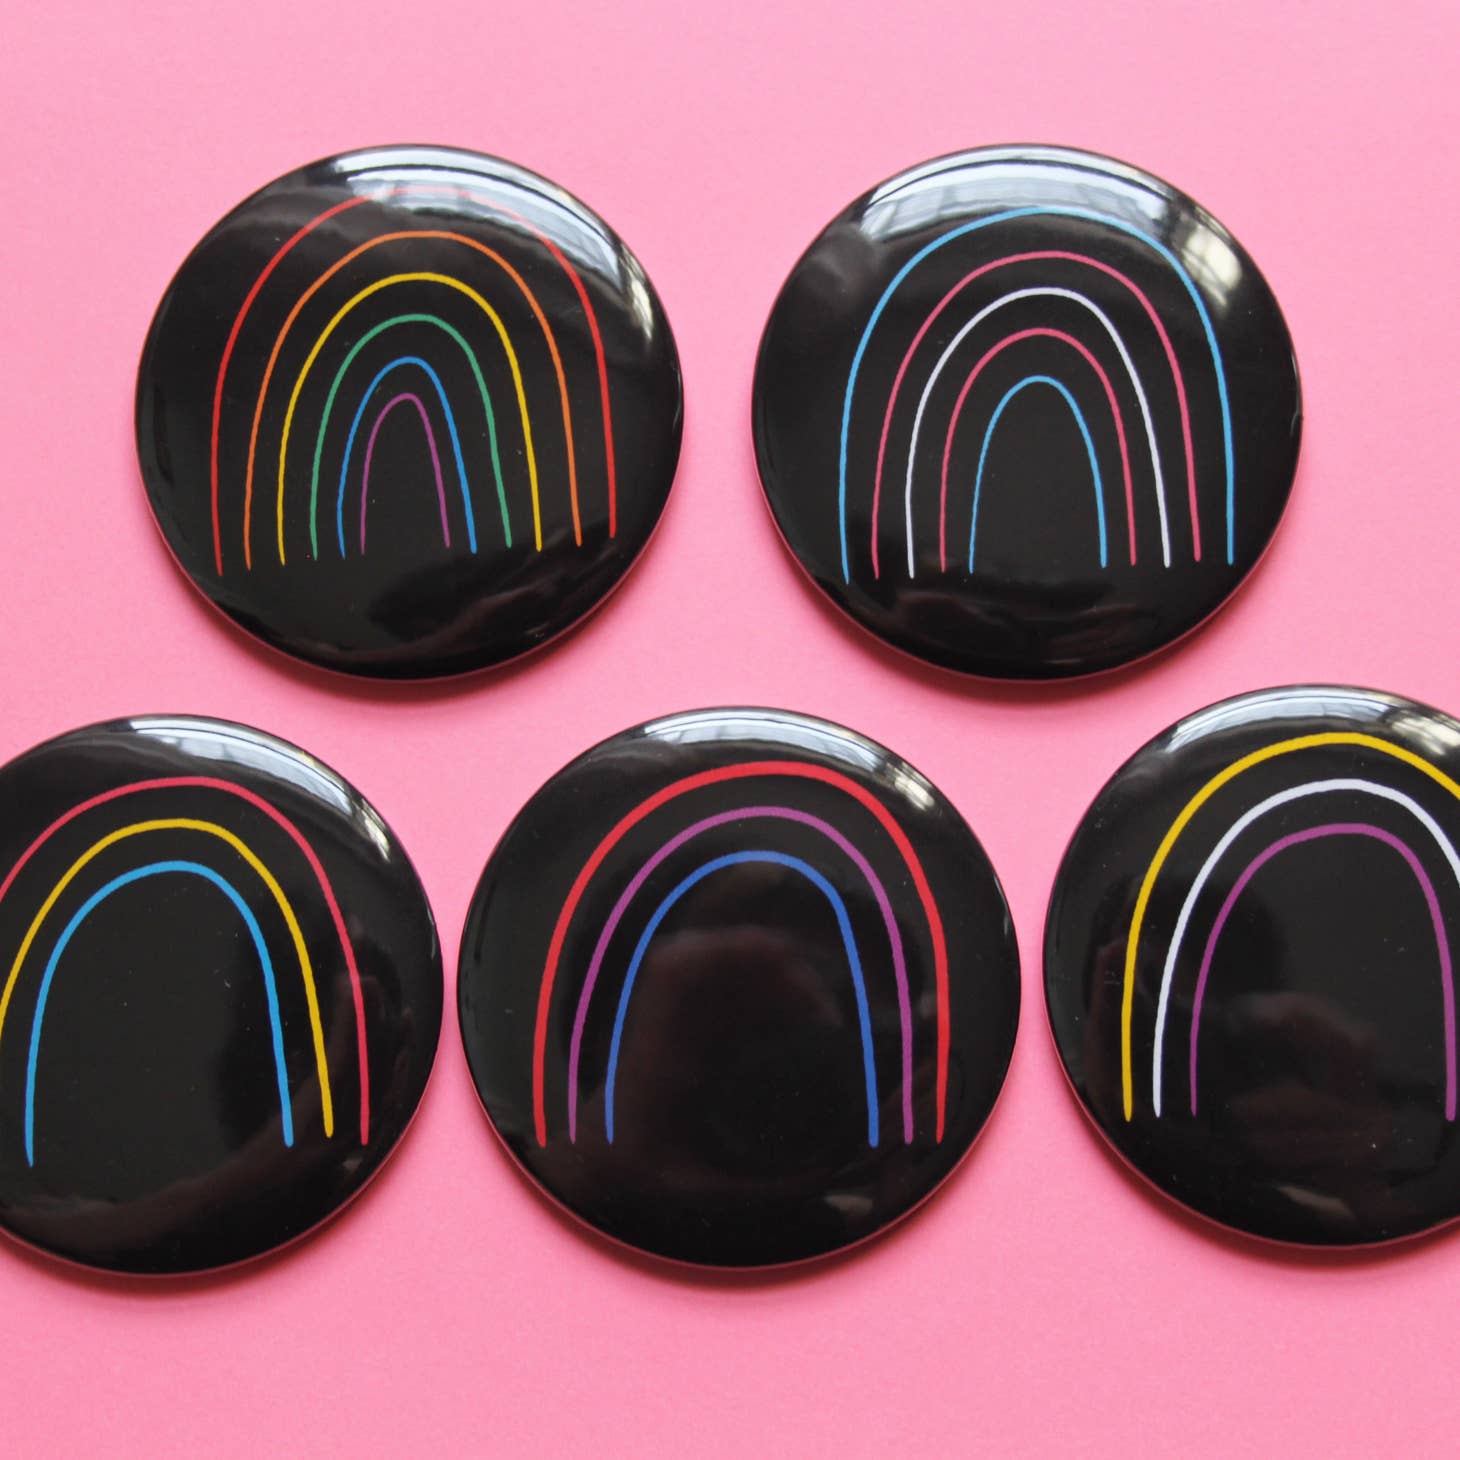 Midge Blitz - Wholesale Magnet - Queer Pride Rainbow Magnets on Faire.com